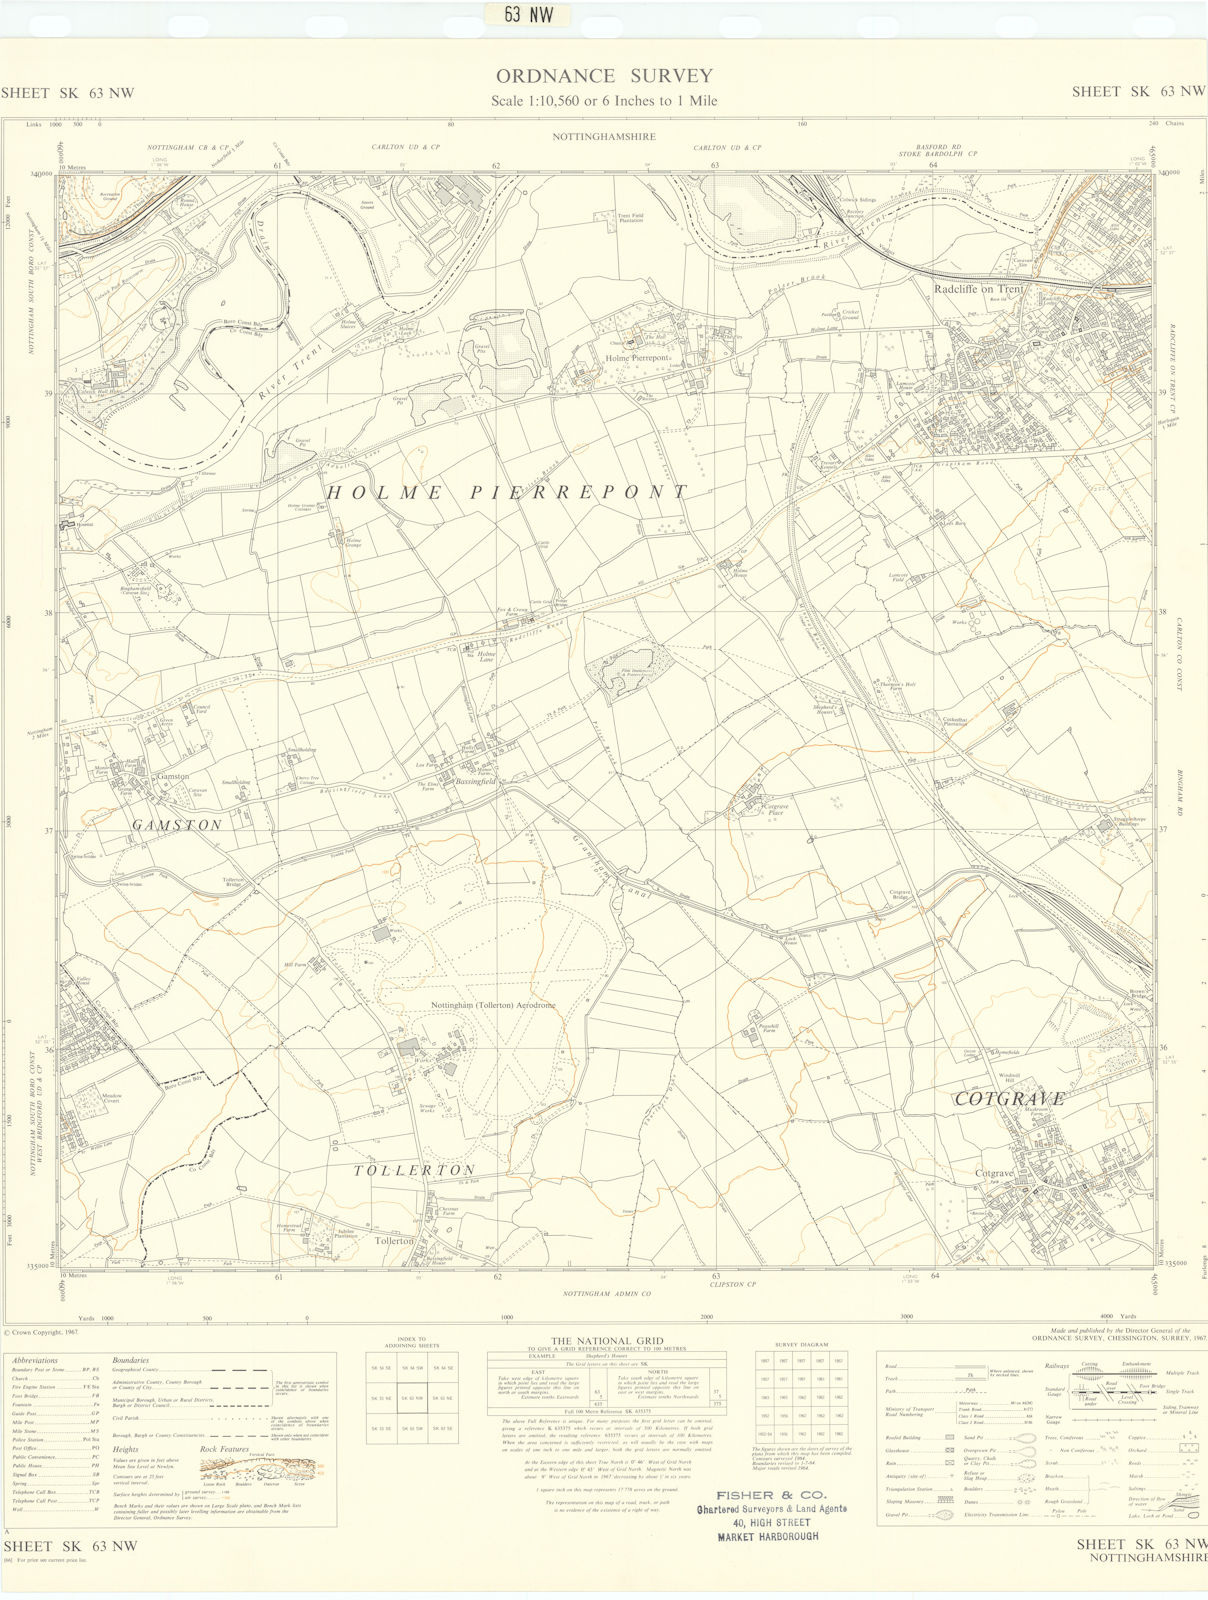 Ordnance Survey SK63NW Notts Radcliffe/Trent Cotgrave Hole Pierrepont 1967 map